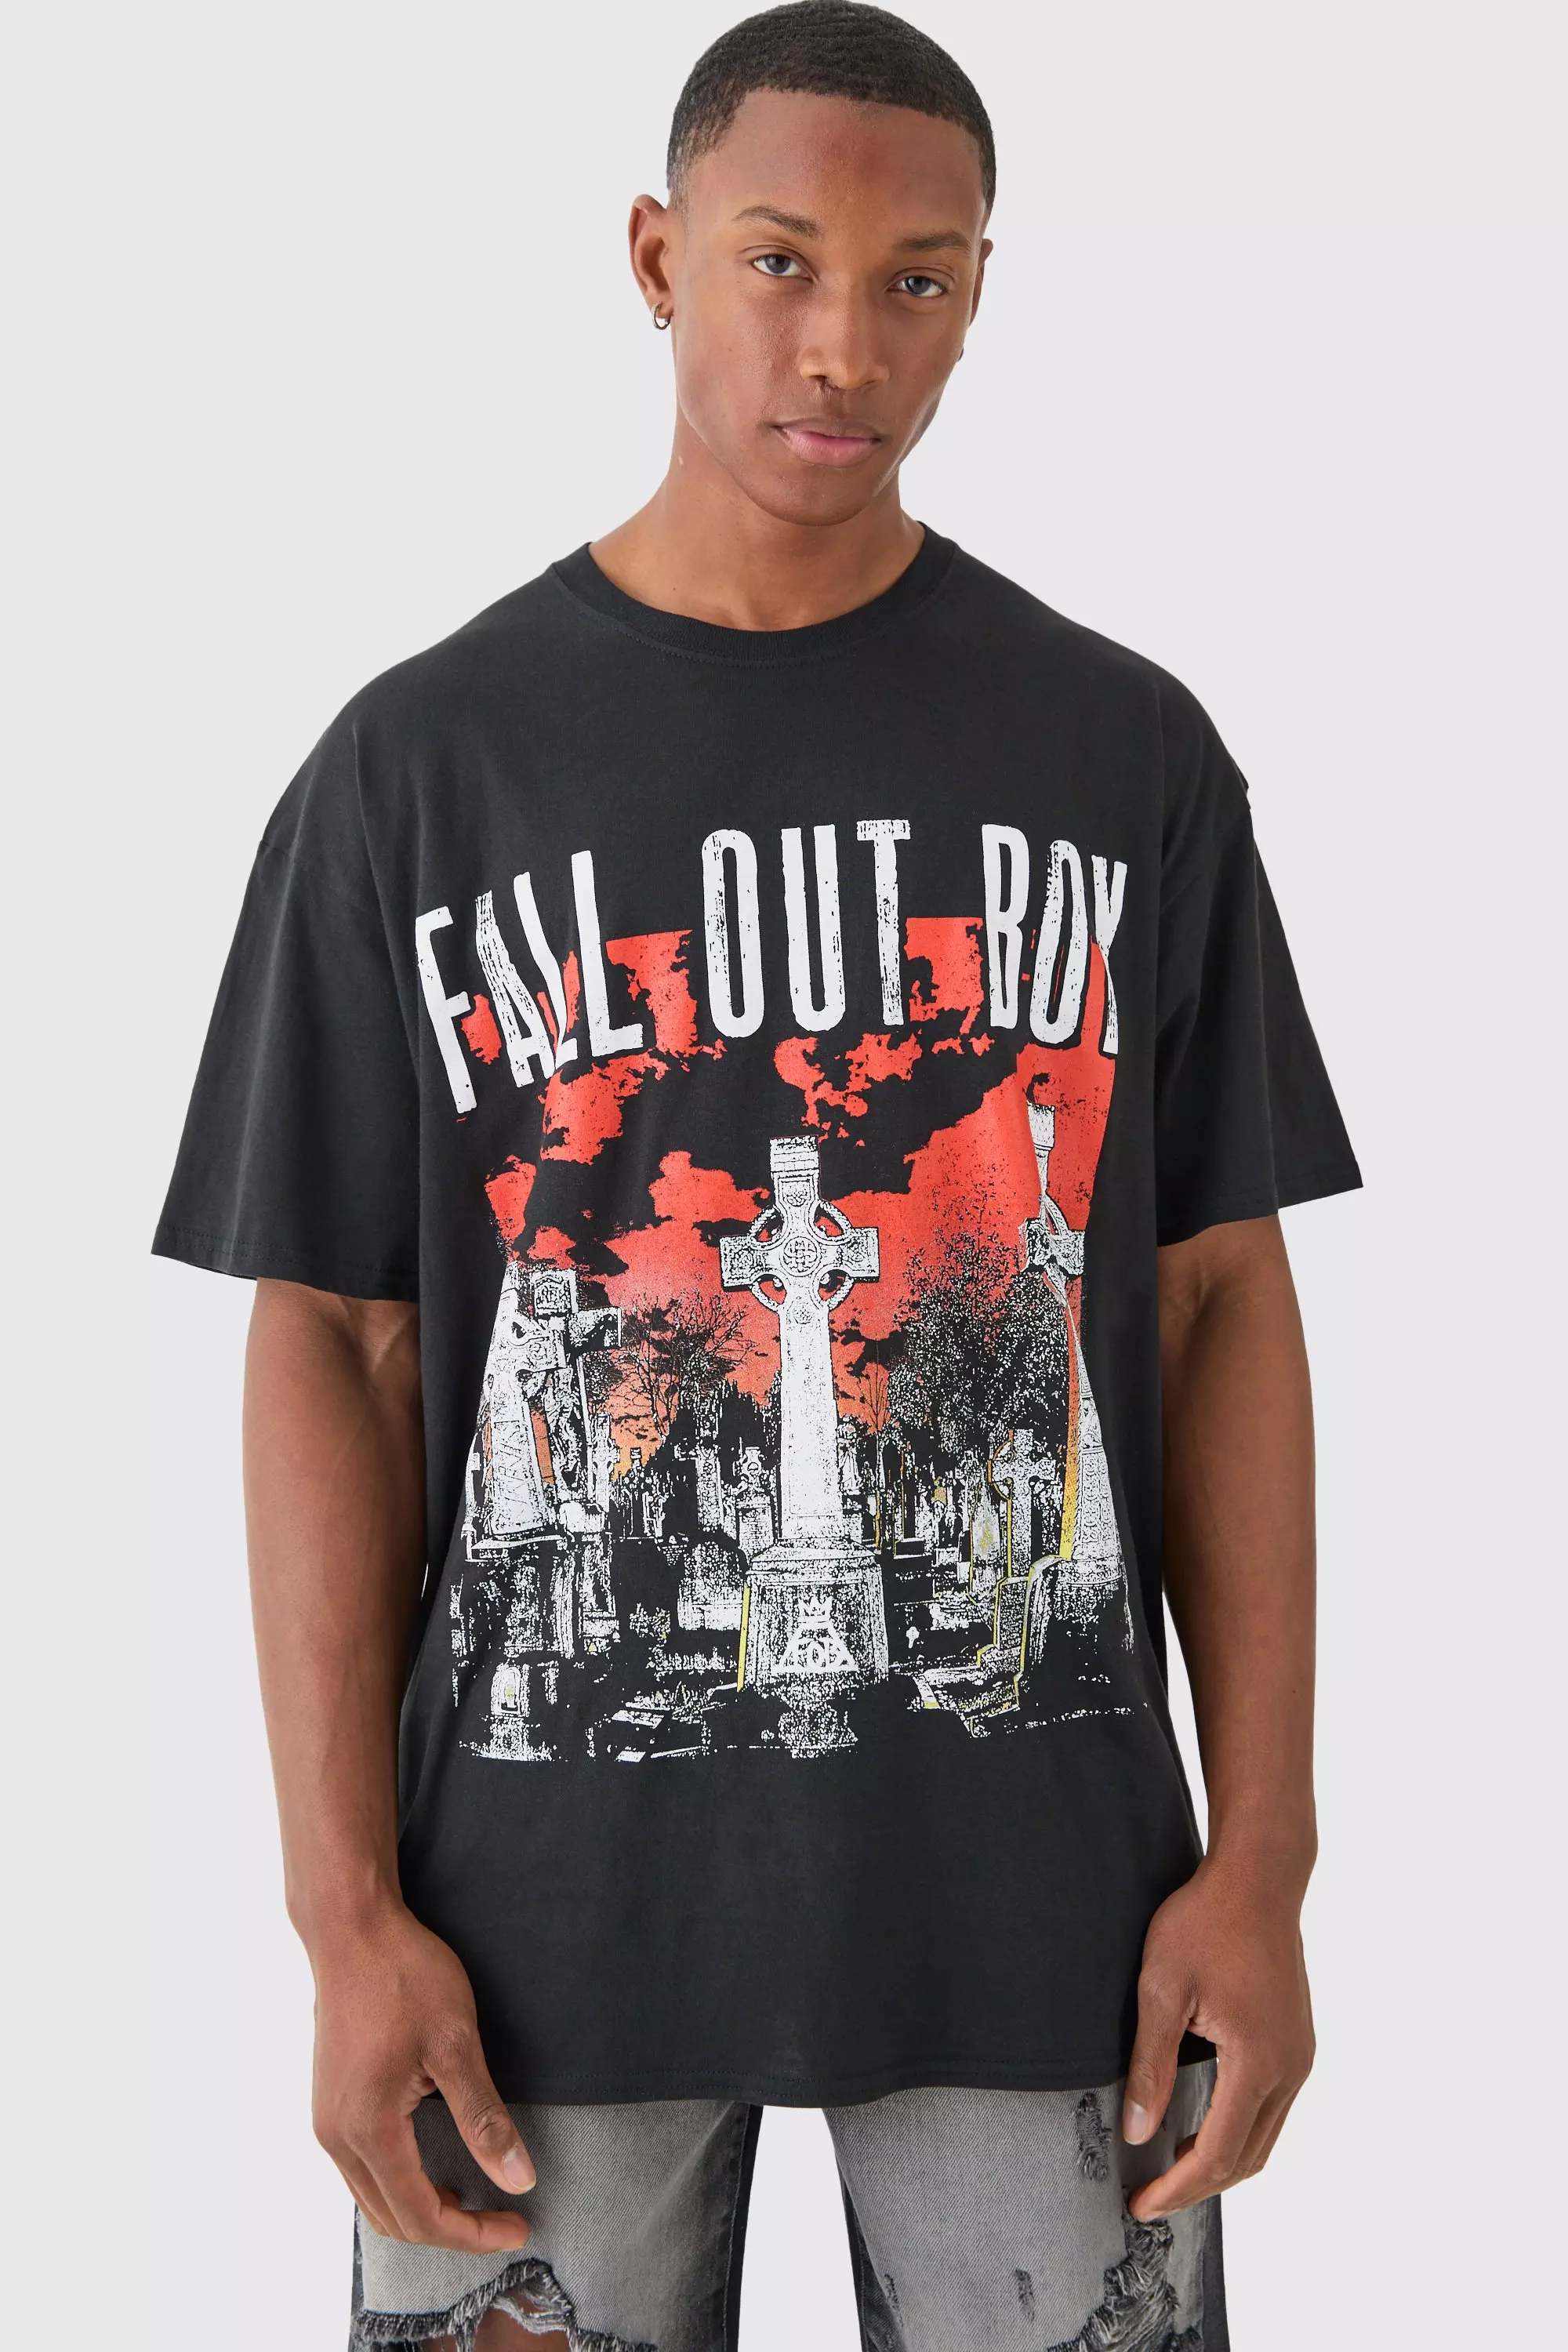 Oversized Boxy Fall Out Boy Band License T-shirt Black